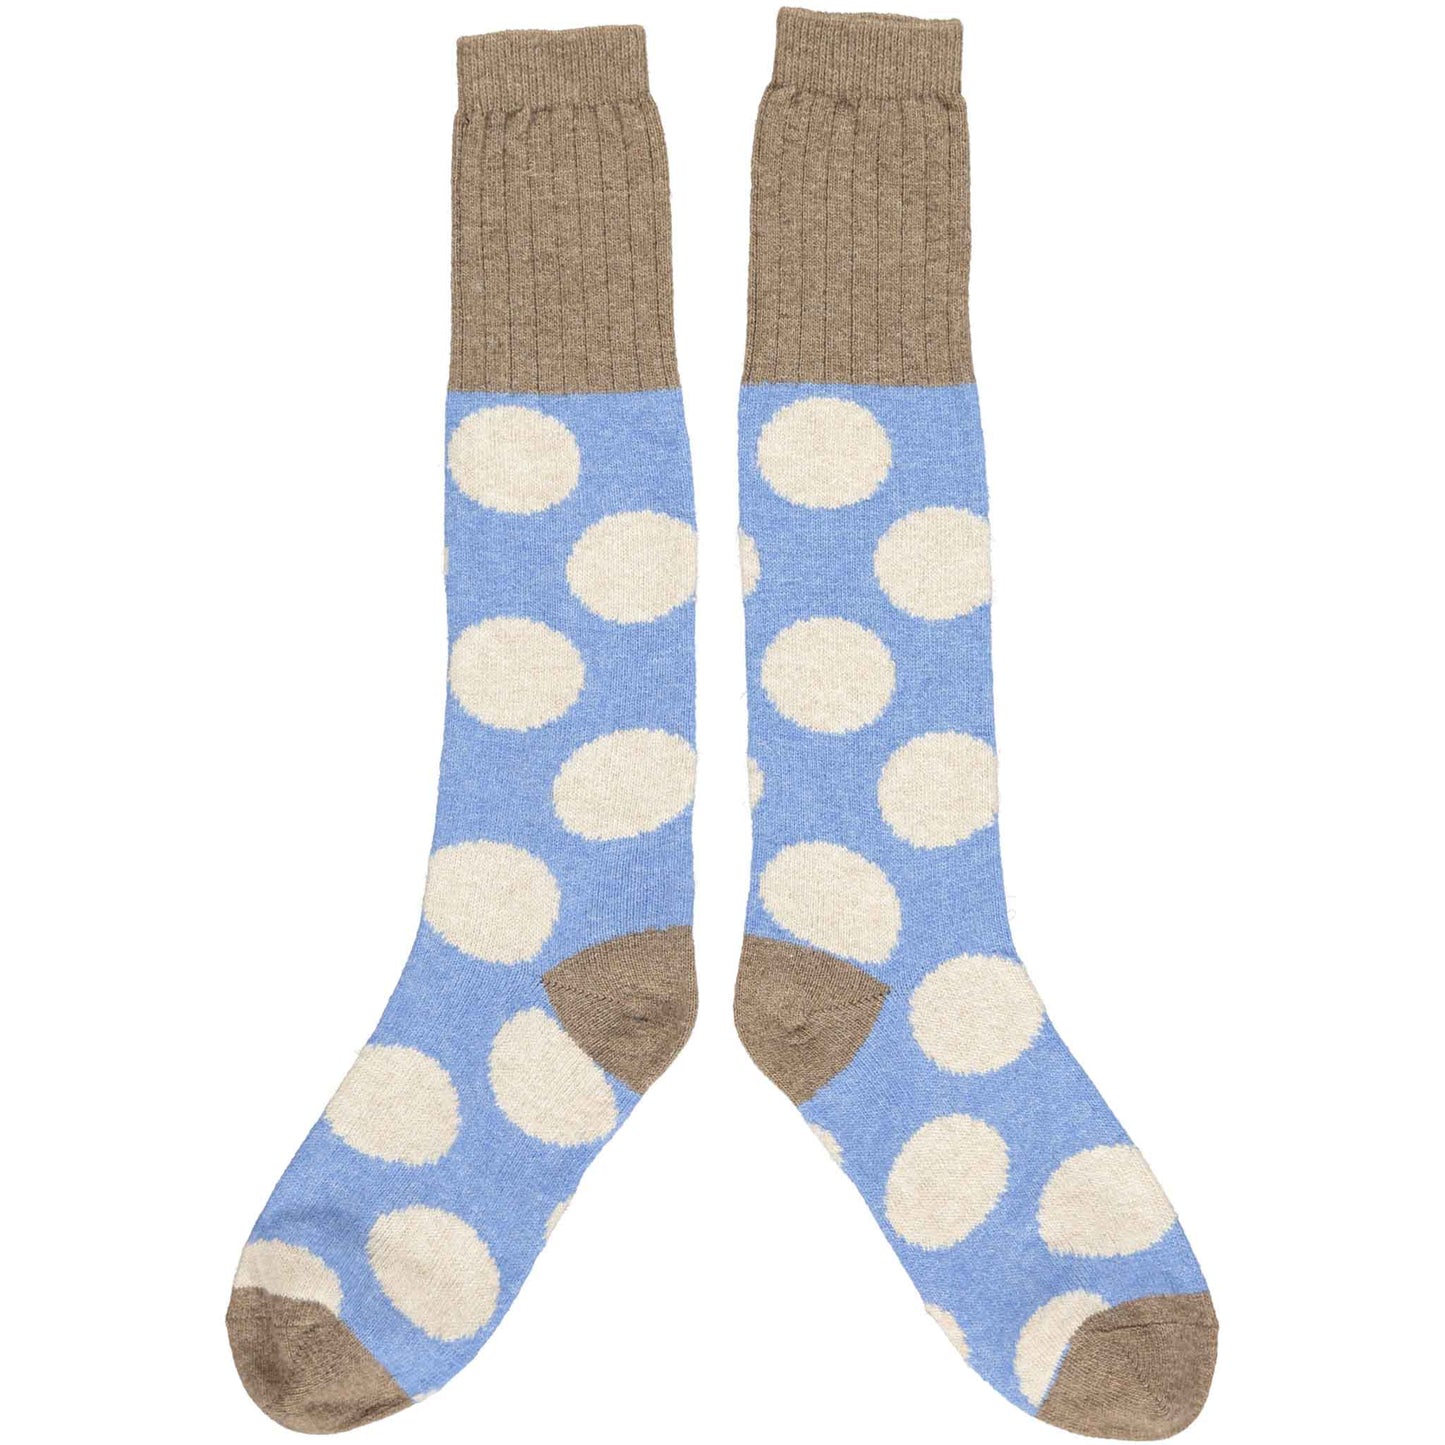 Lambswool Boot Socks - Large Spot Blue (Medium size)